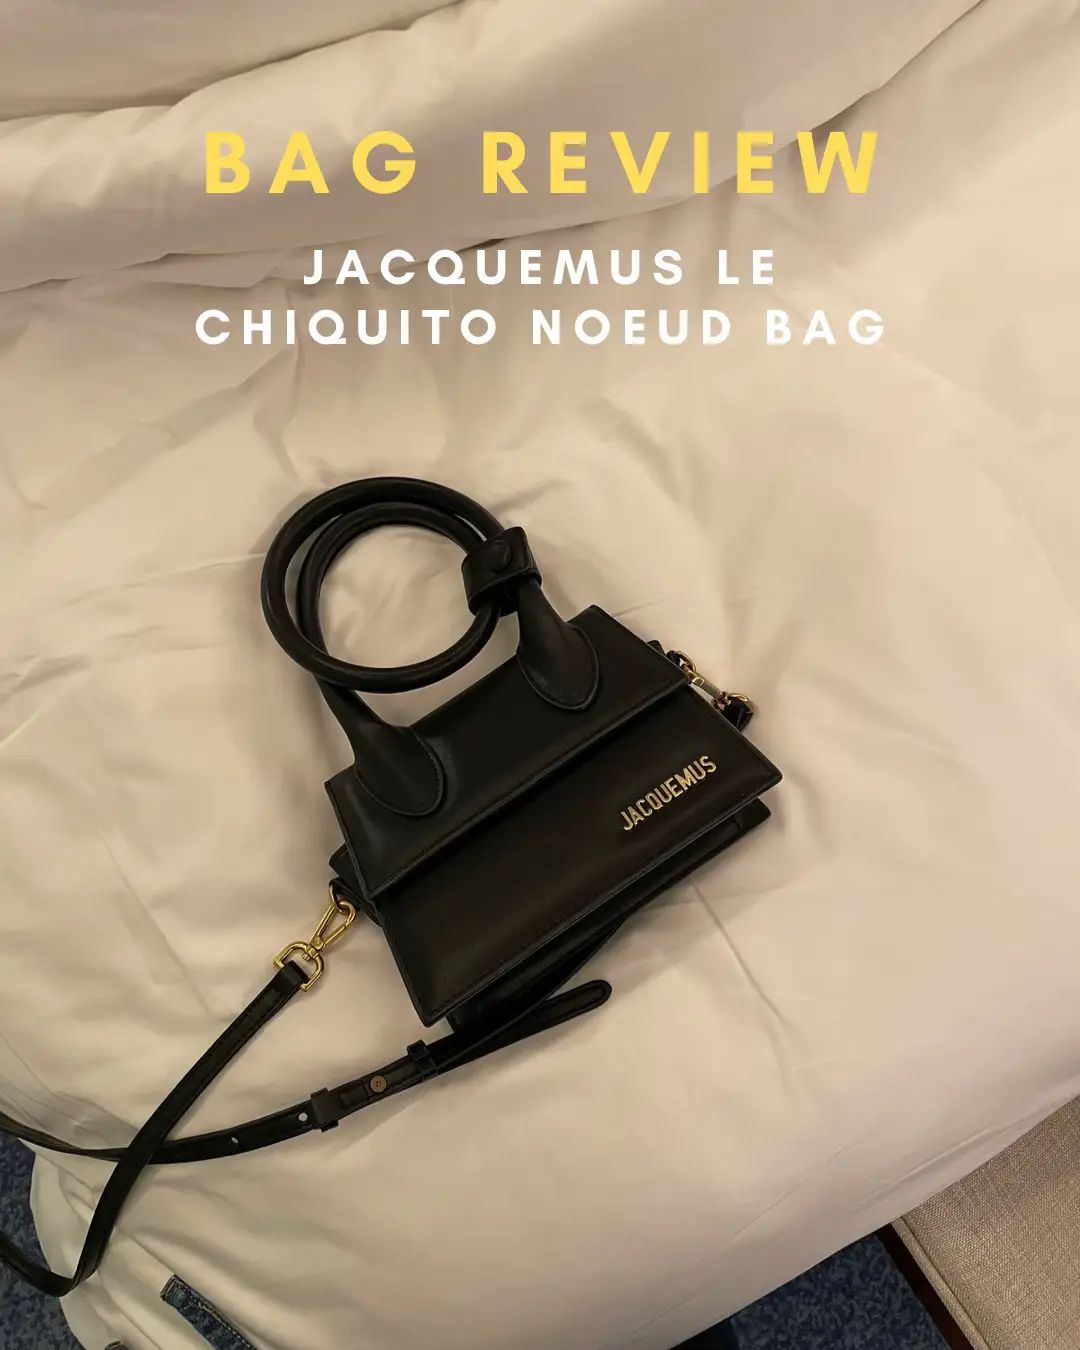 JACQUEMUS LE GRAND CHIQUITO BAG: MY HONEST REVIEW